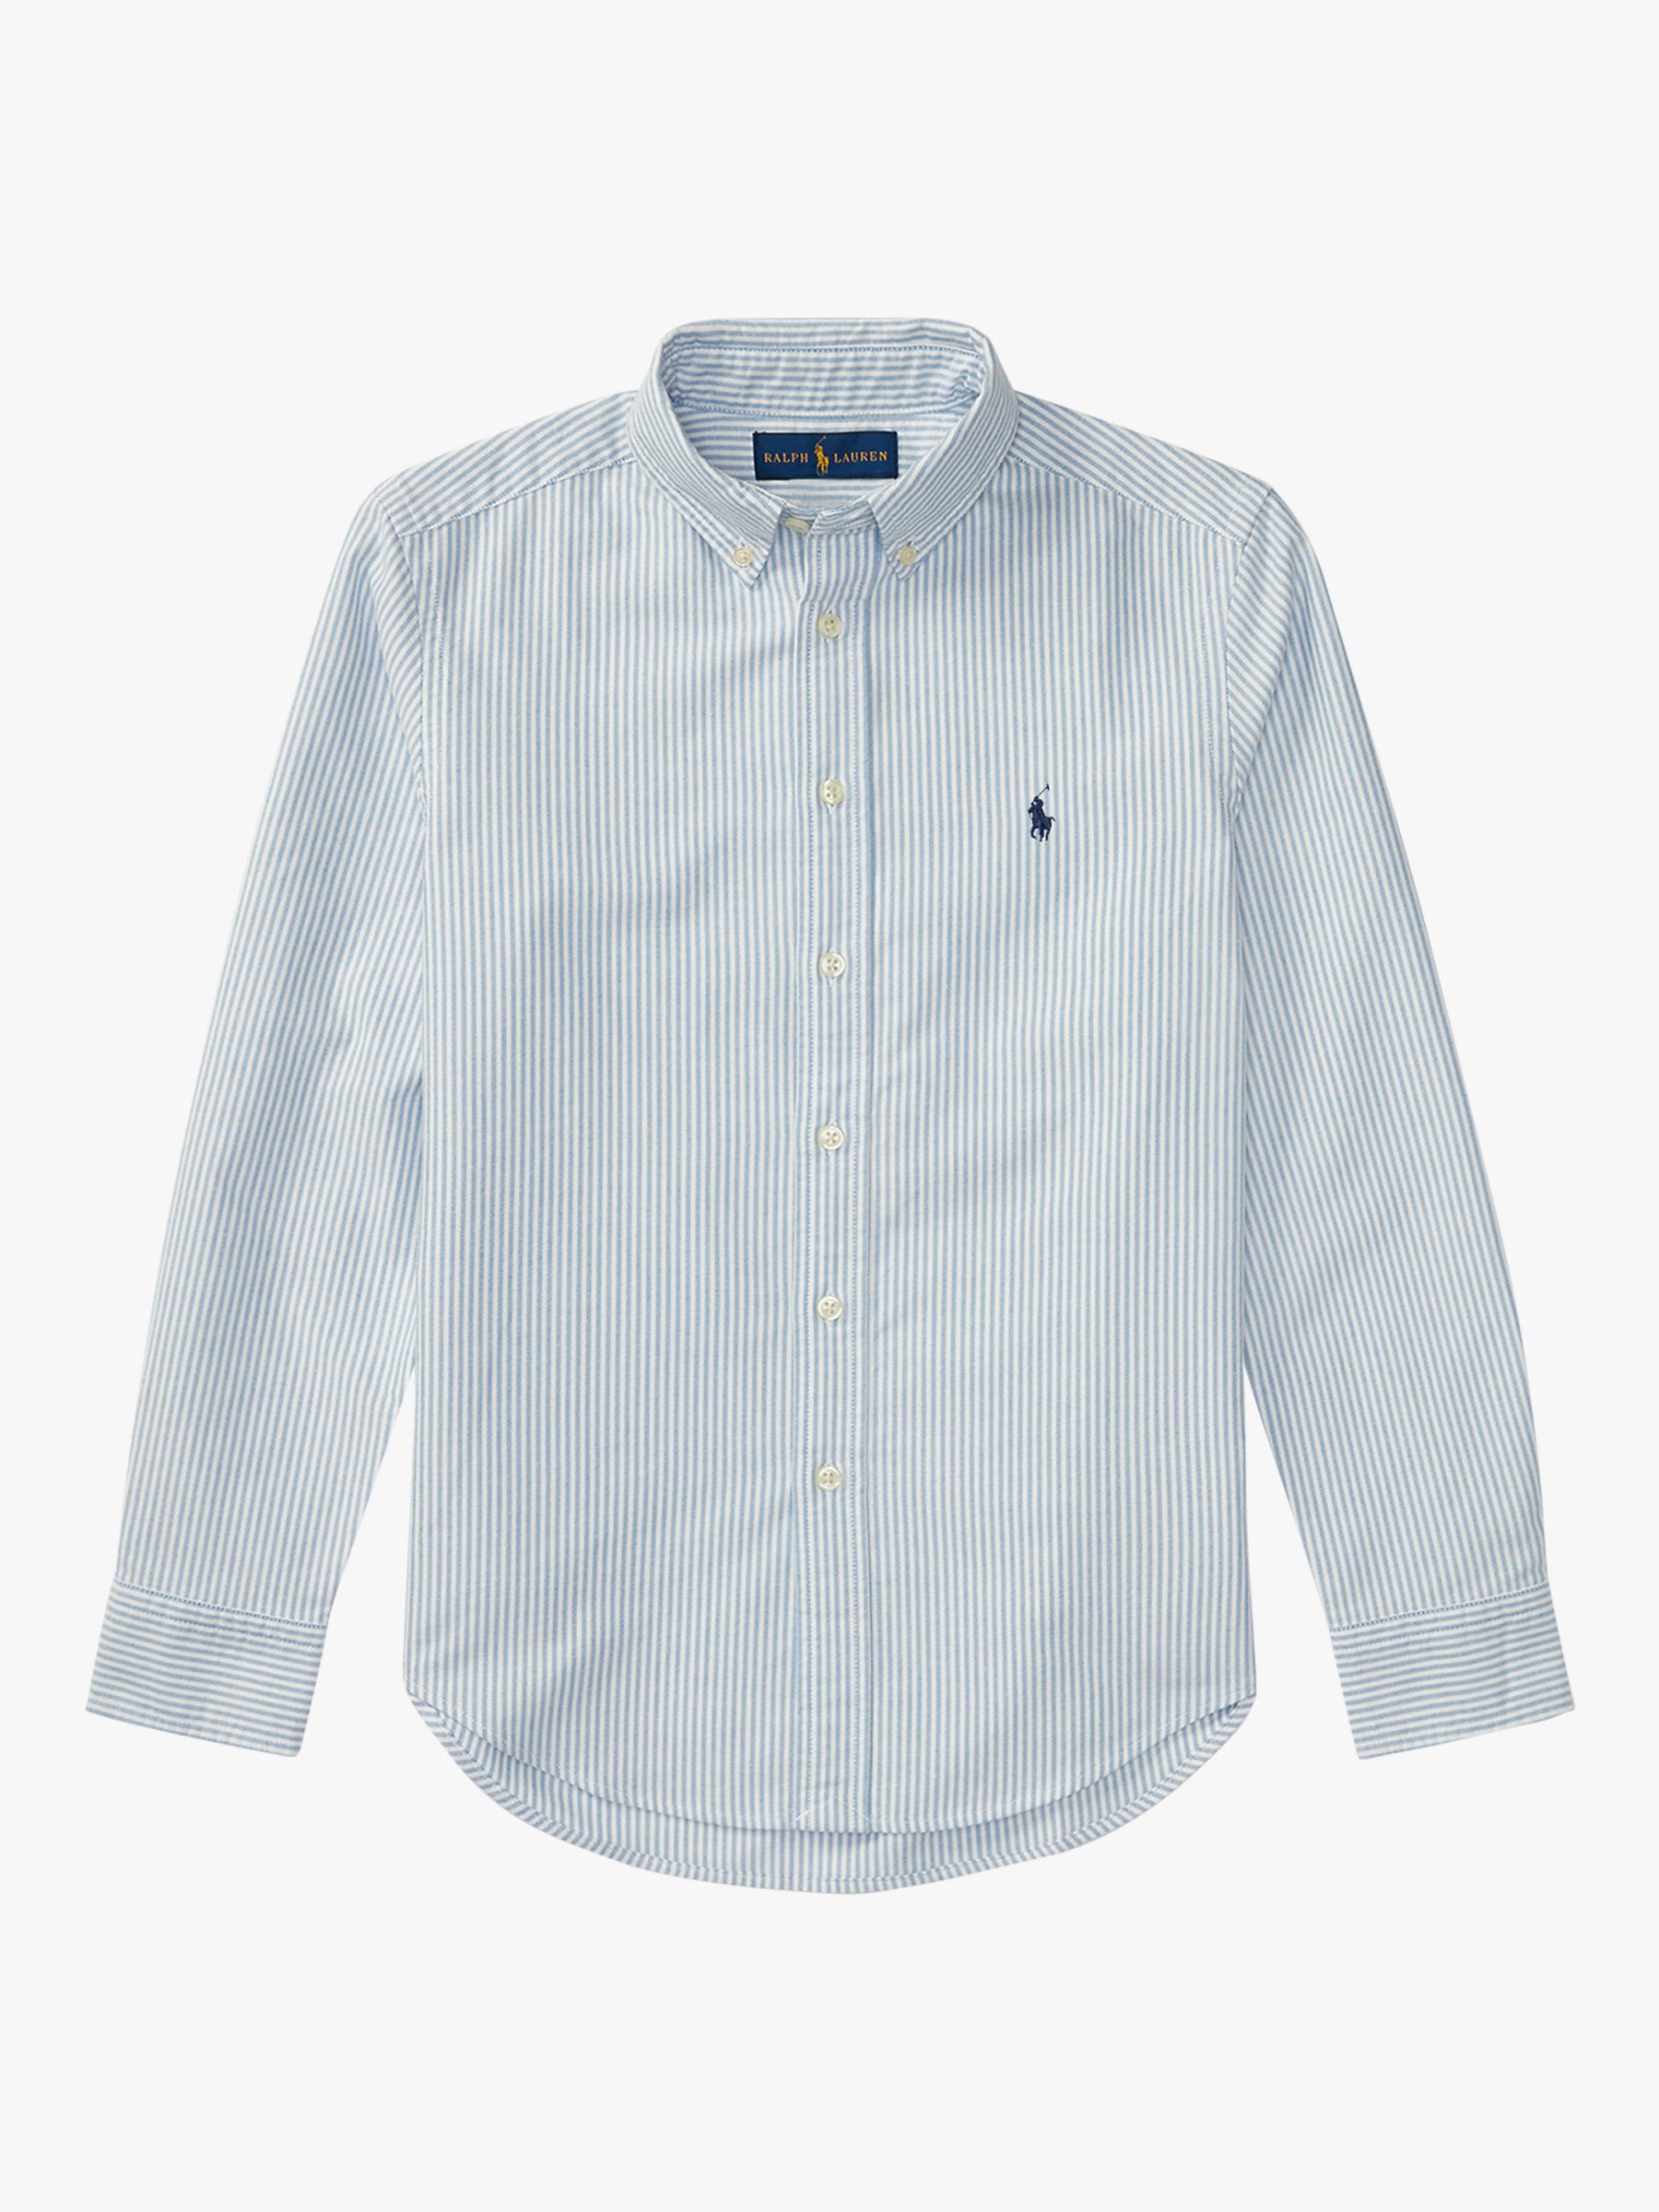 Polo Ralph Lauren Kids' Pinstripe Oxford Shirt, Blue, 5 years